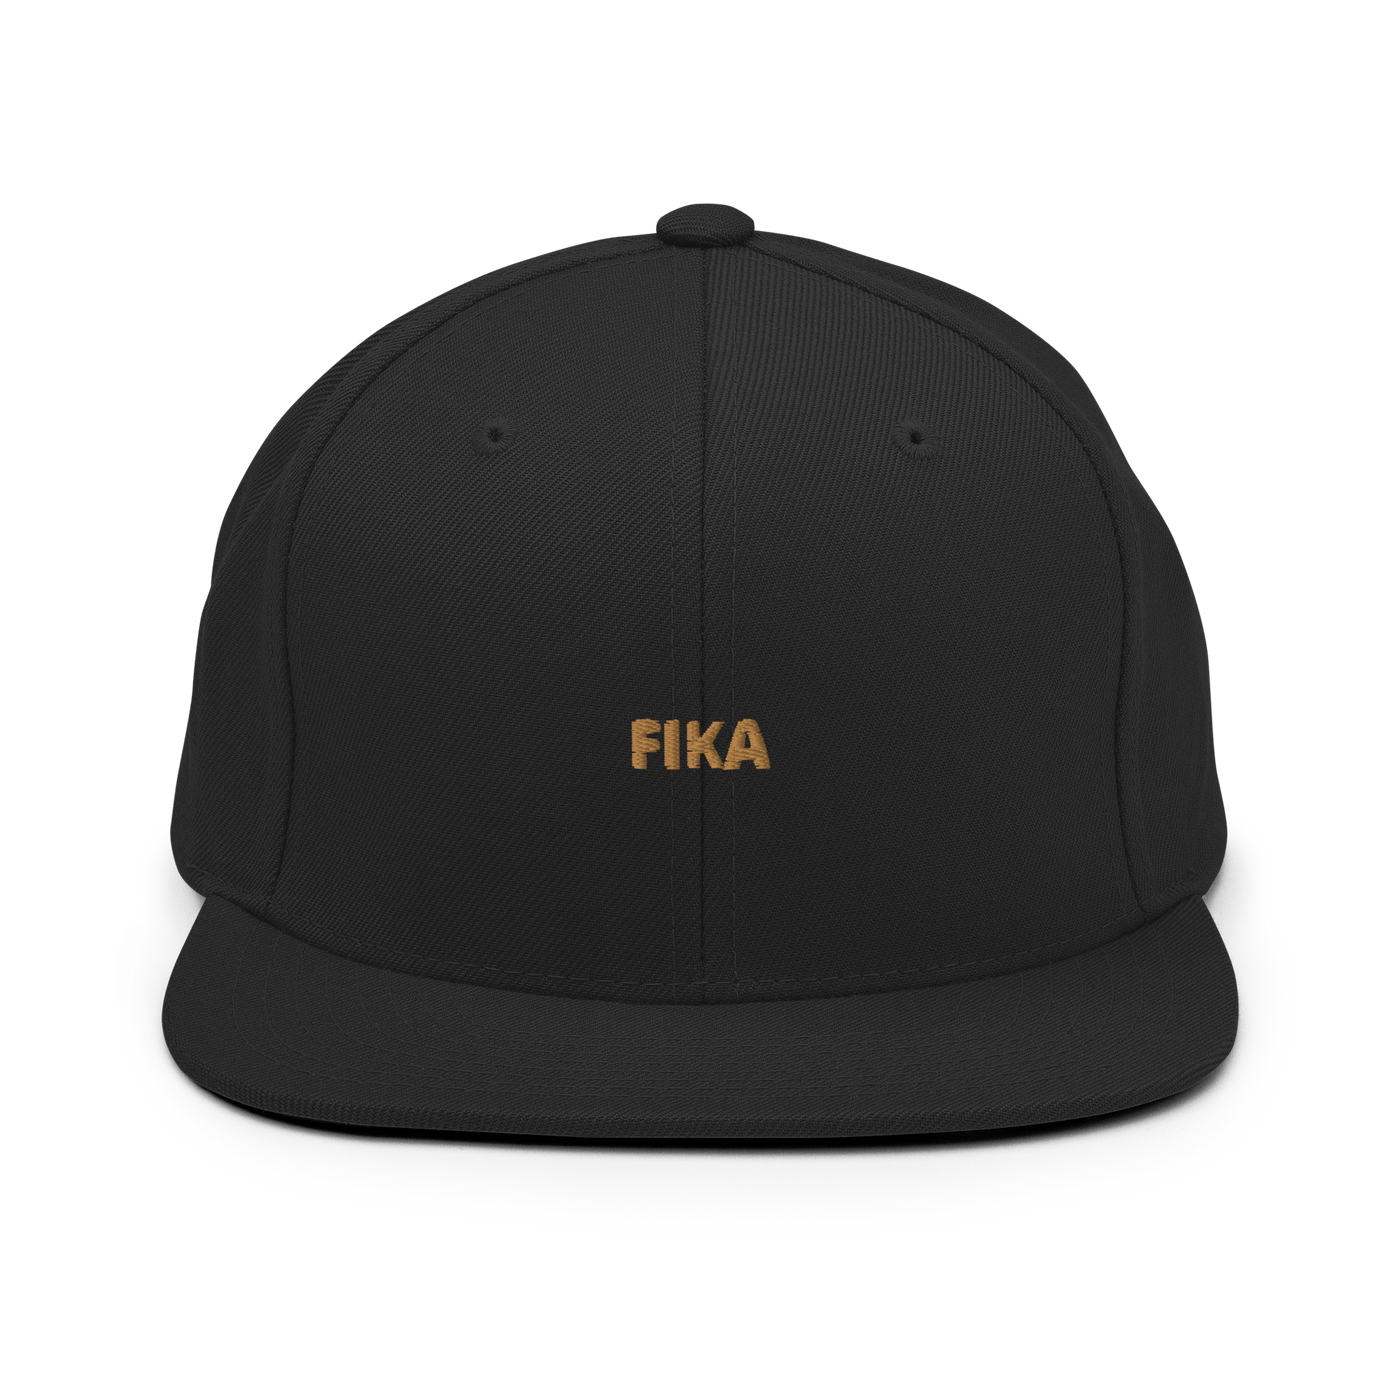 FIKA Snapback - Black - - Just Another Cap Store